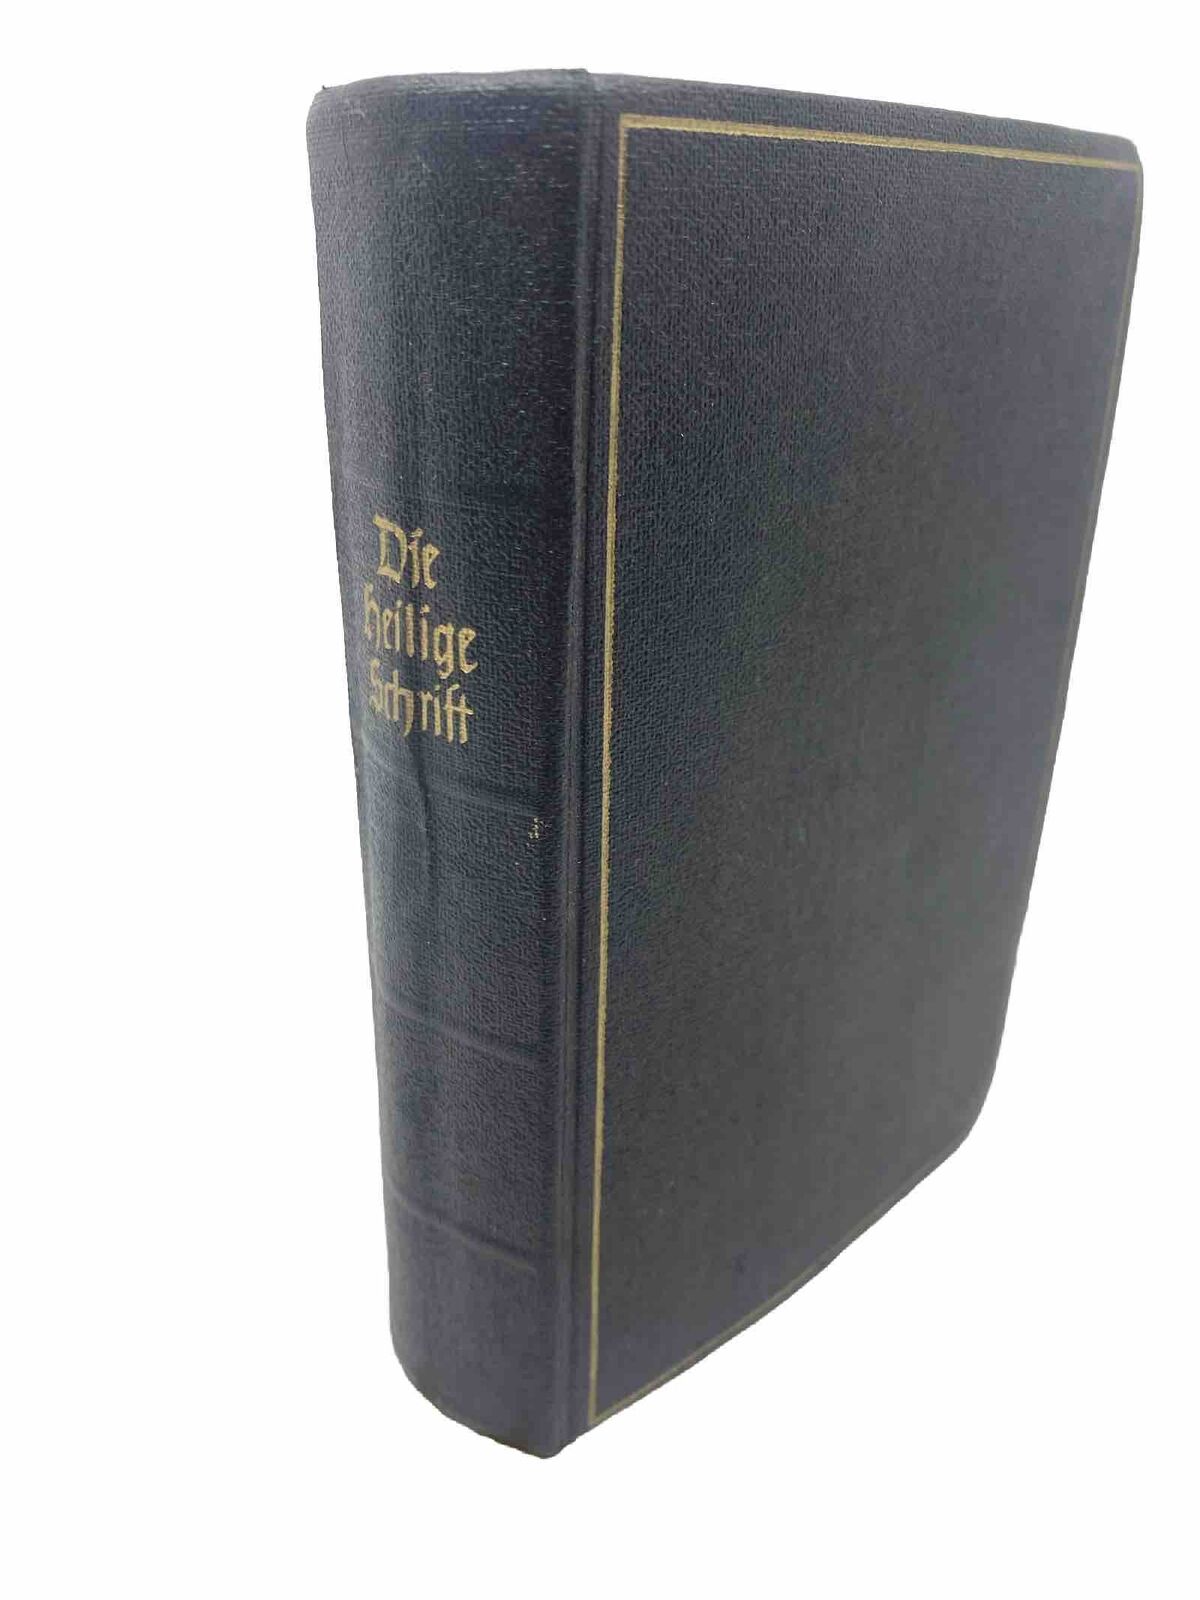 1912 Die Heilige Schrift Martin Luthers German Bible Horst Georg Inscription